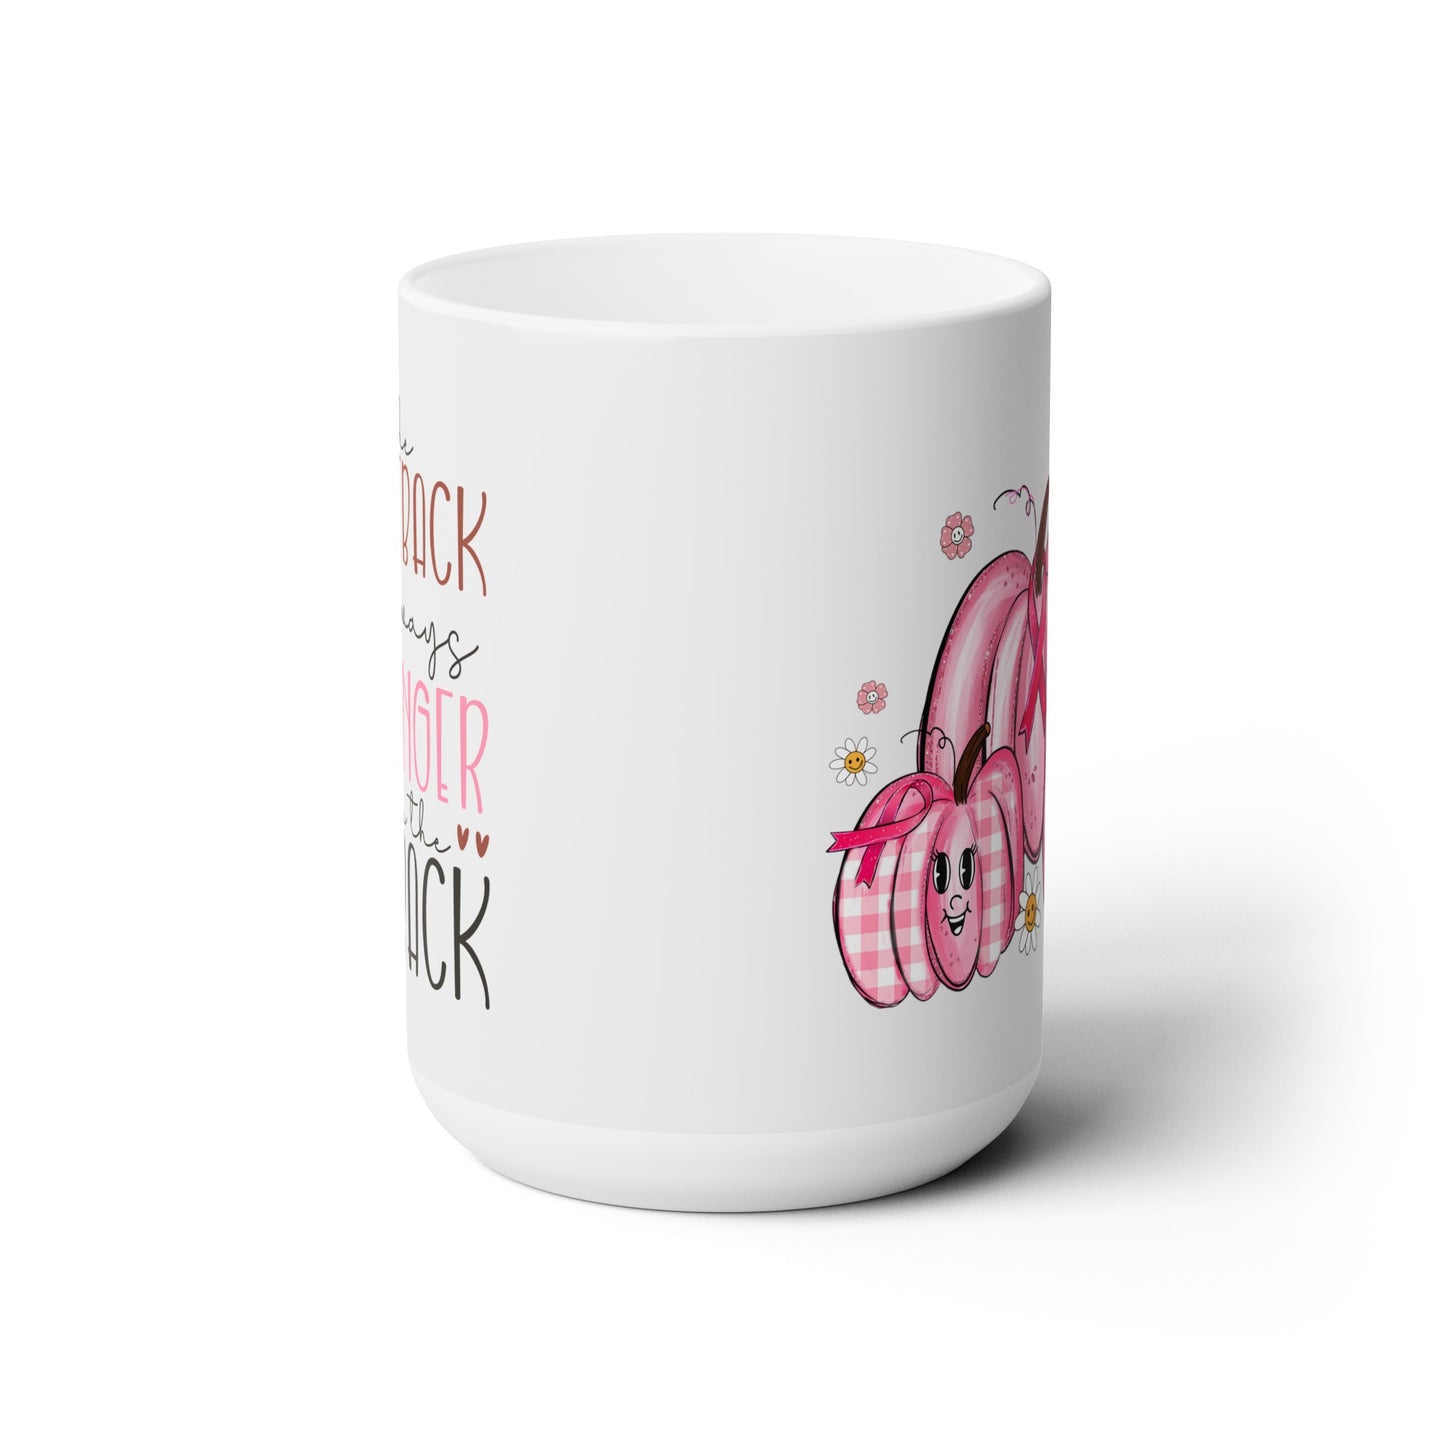 Breast Cancer Ceramic Mug